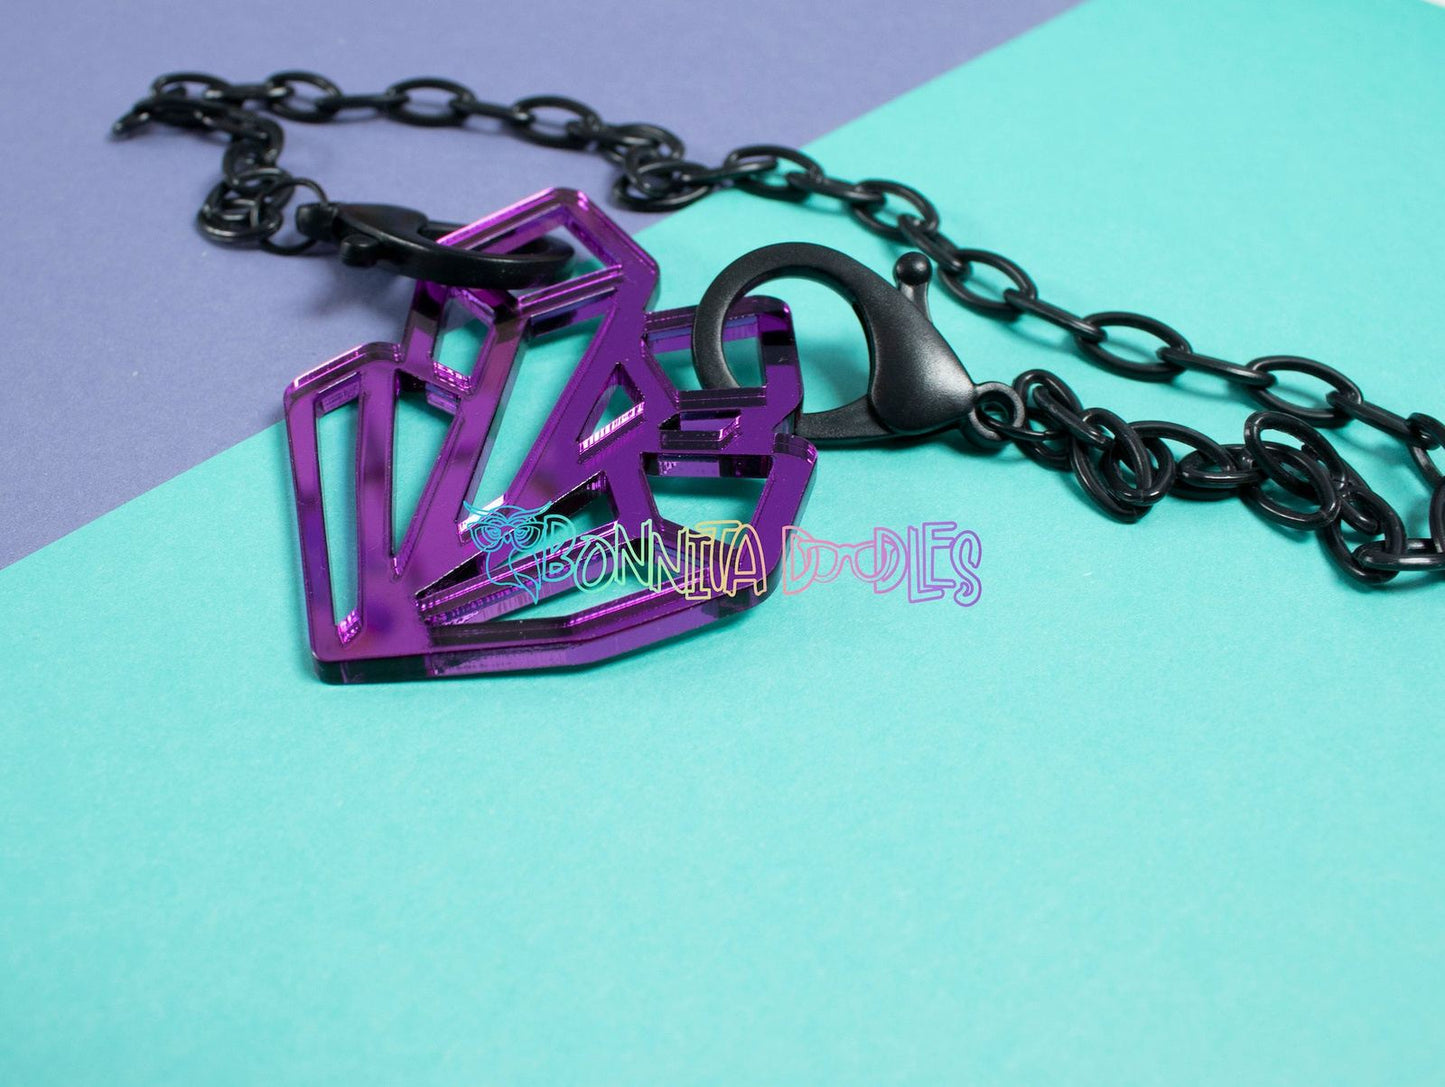 Purple Mirror Geode Charm necklace - Handmade gifts